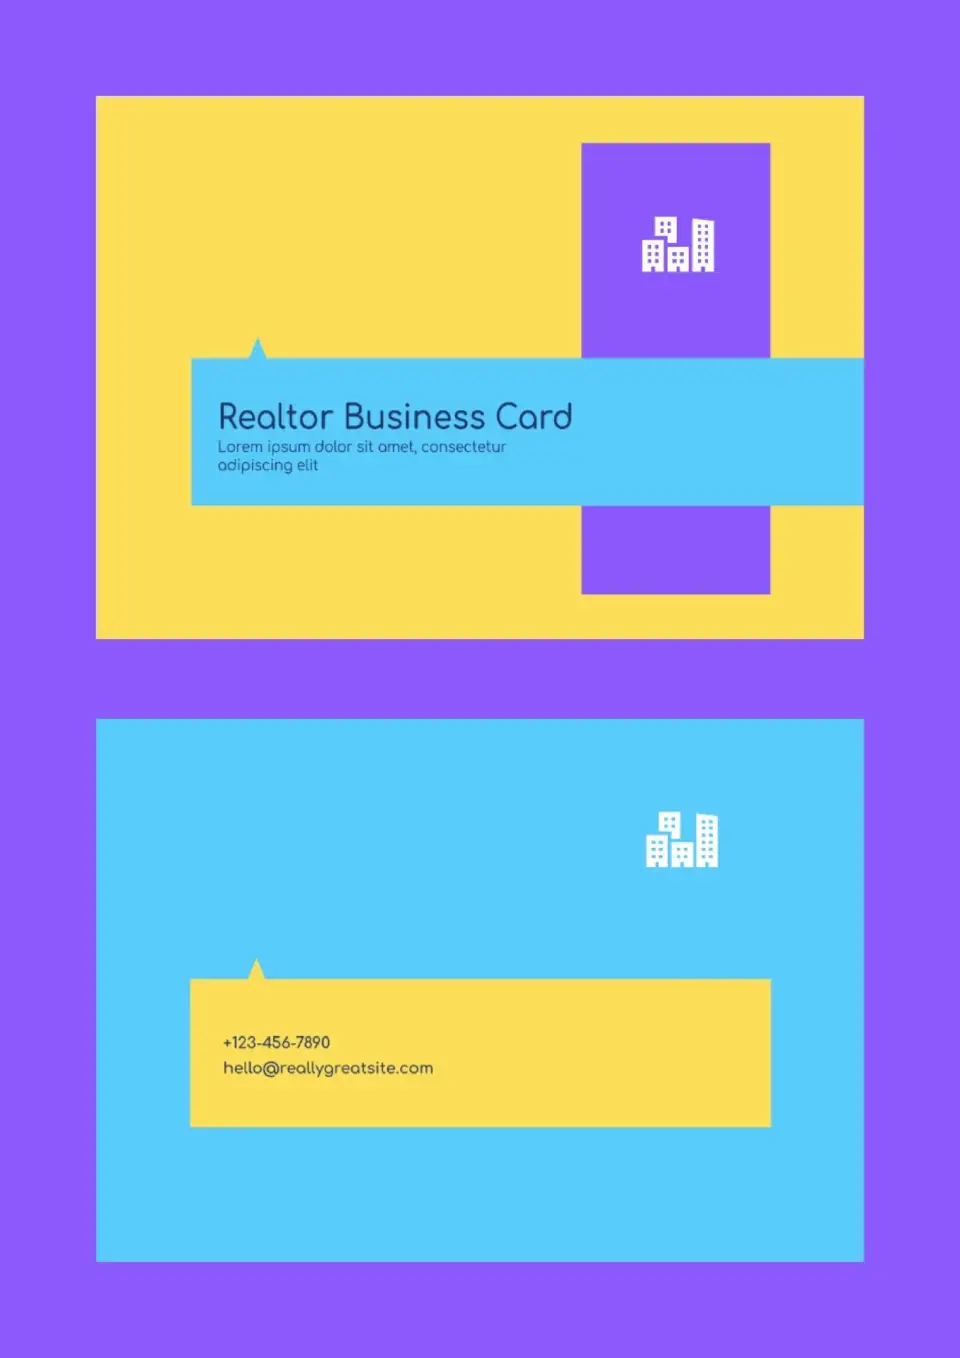 Realtor Business Card Template for Google Docs